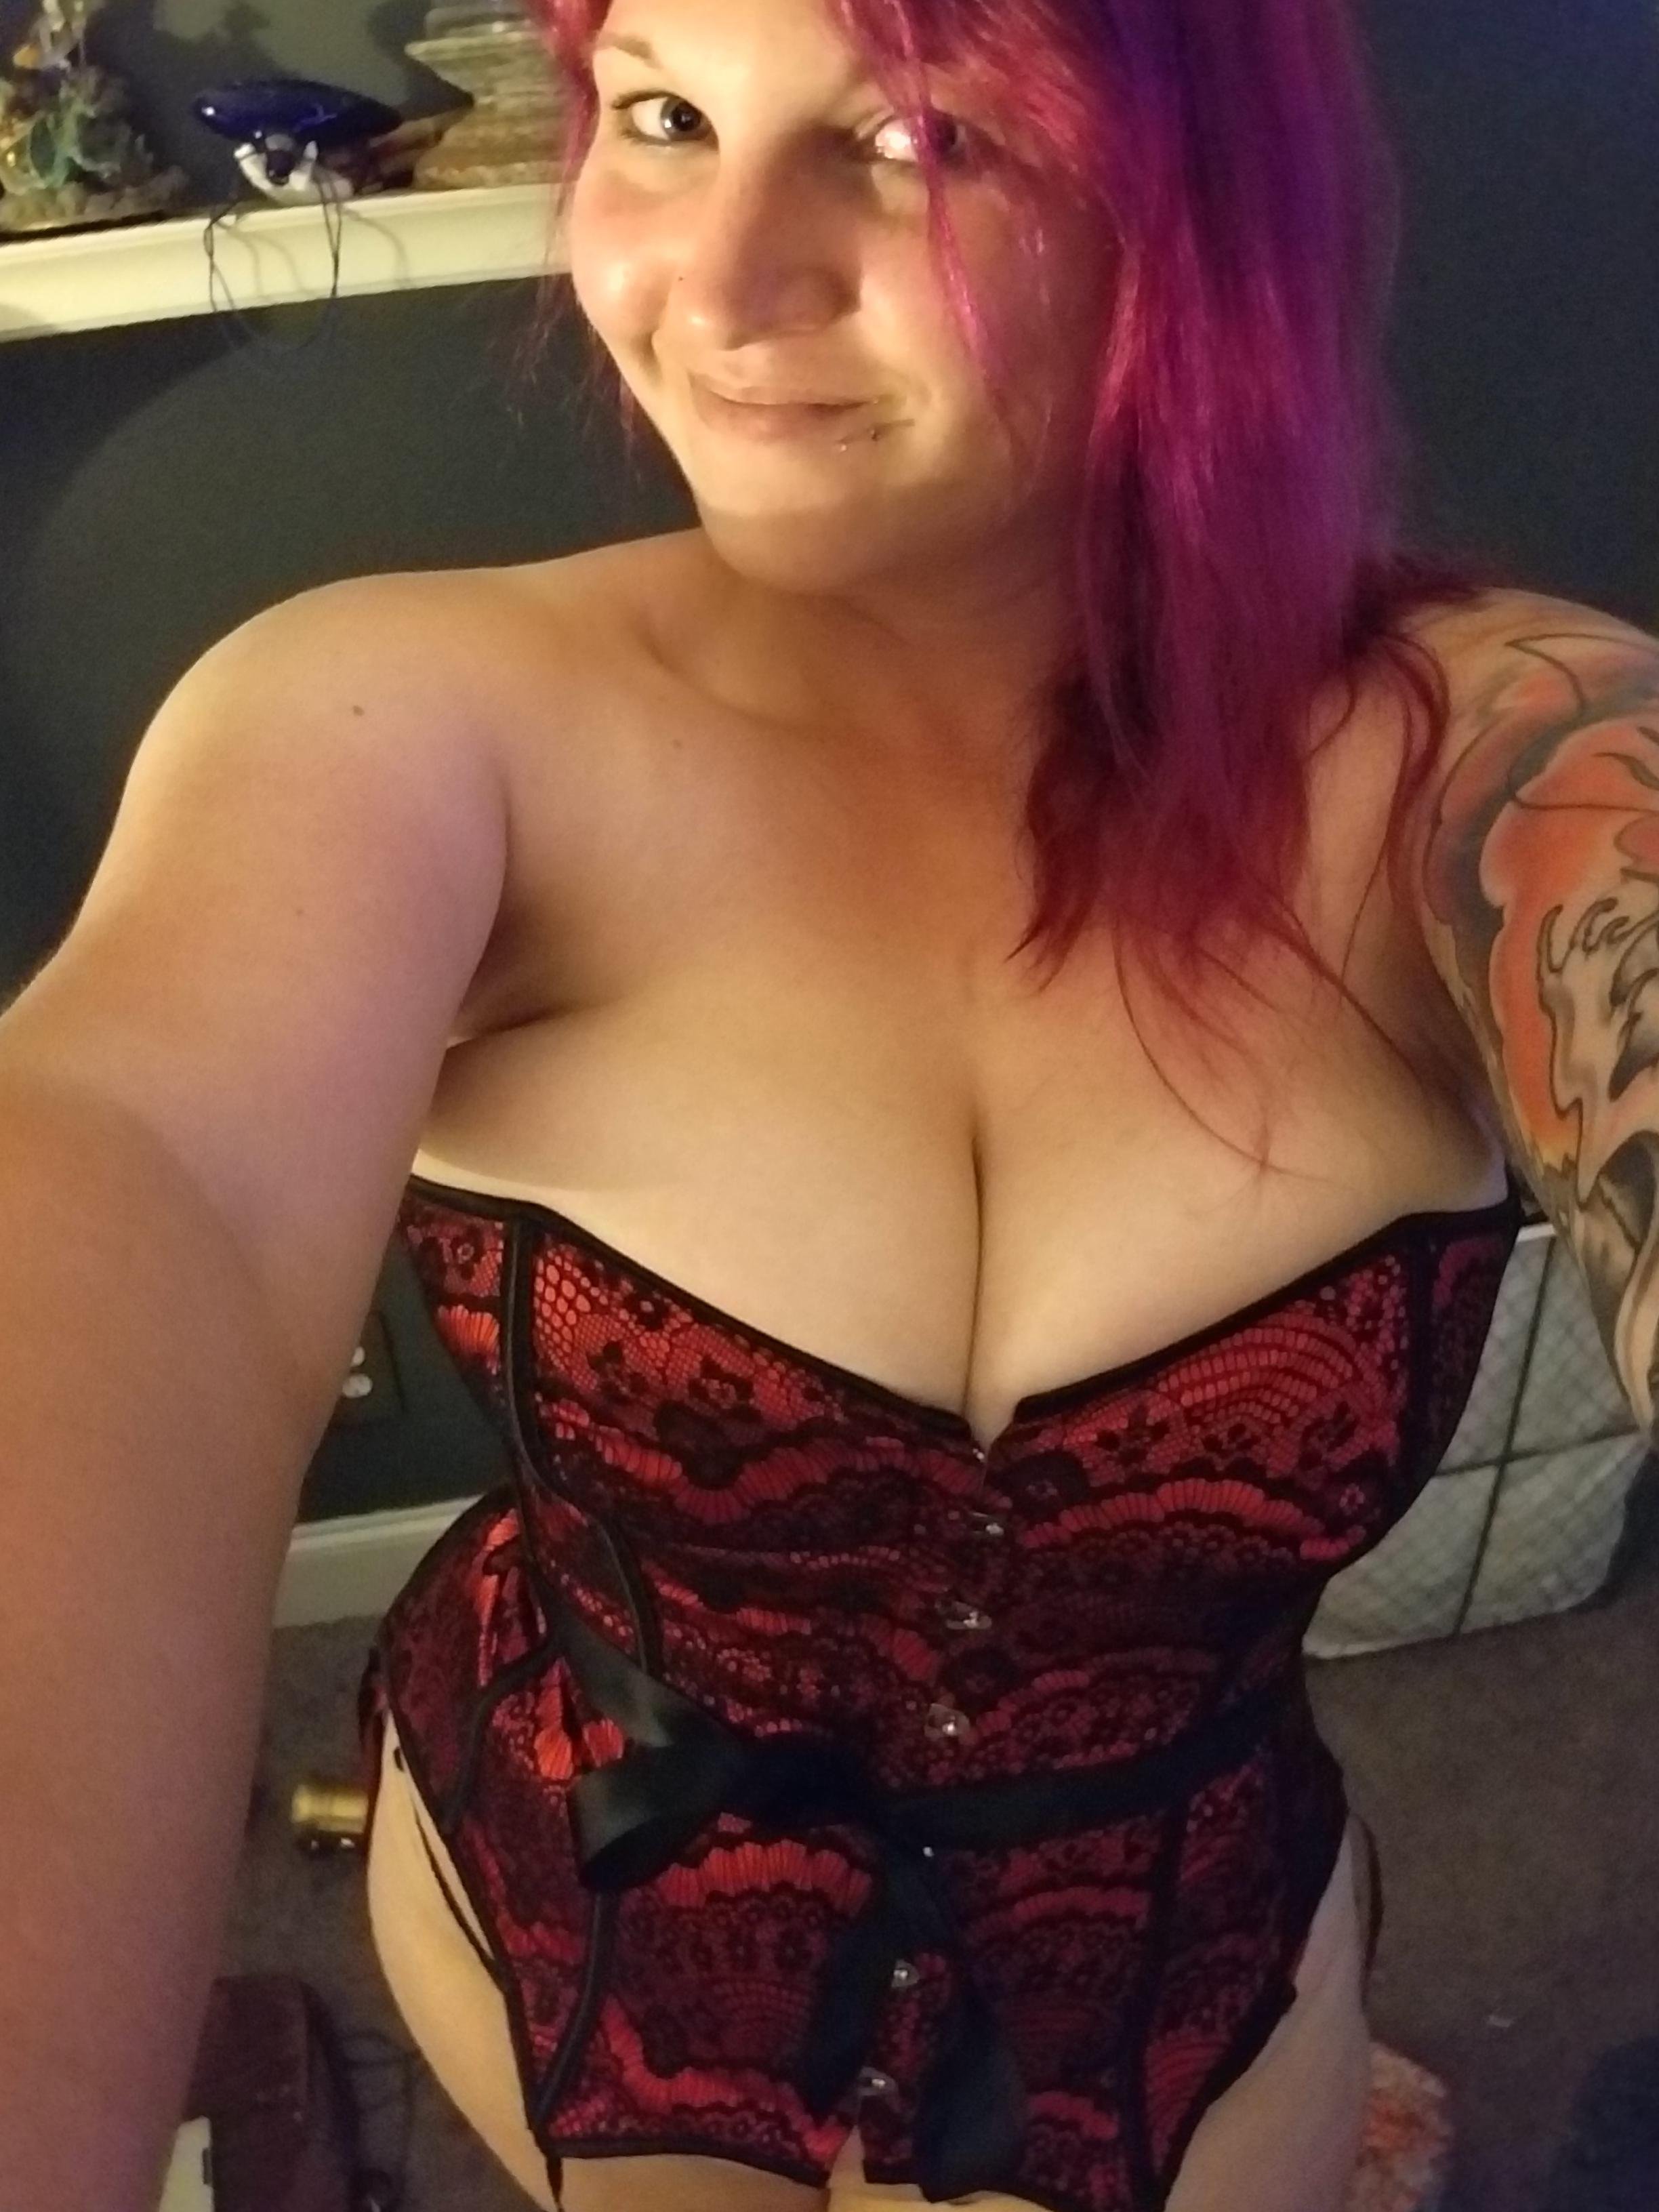 I love my corsets